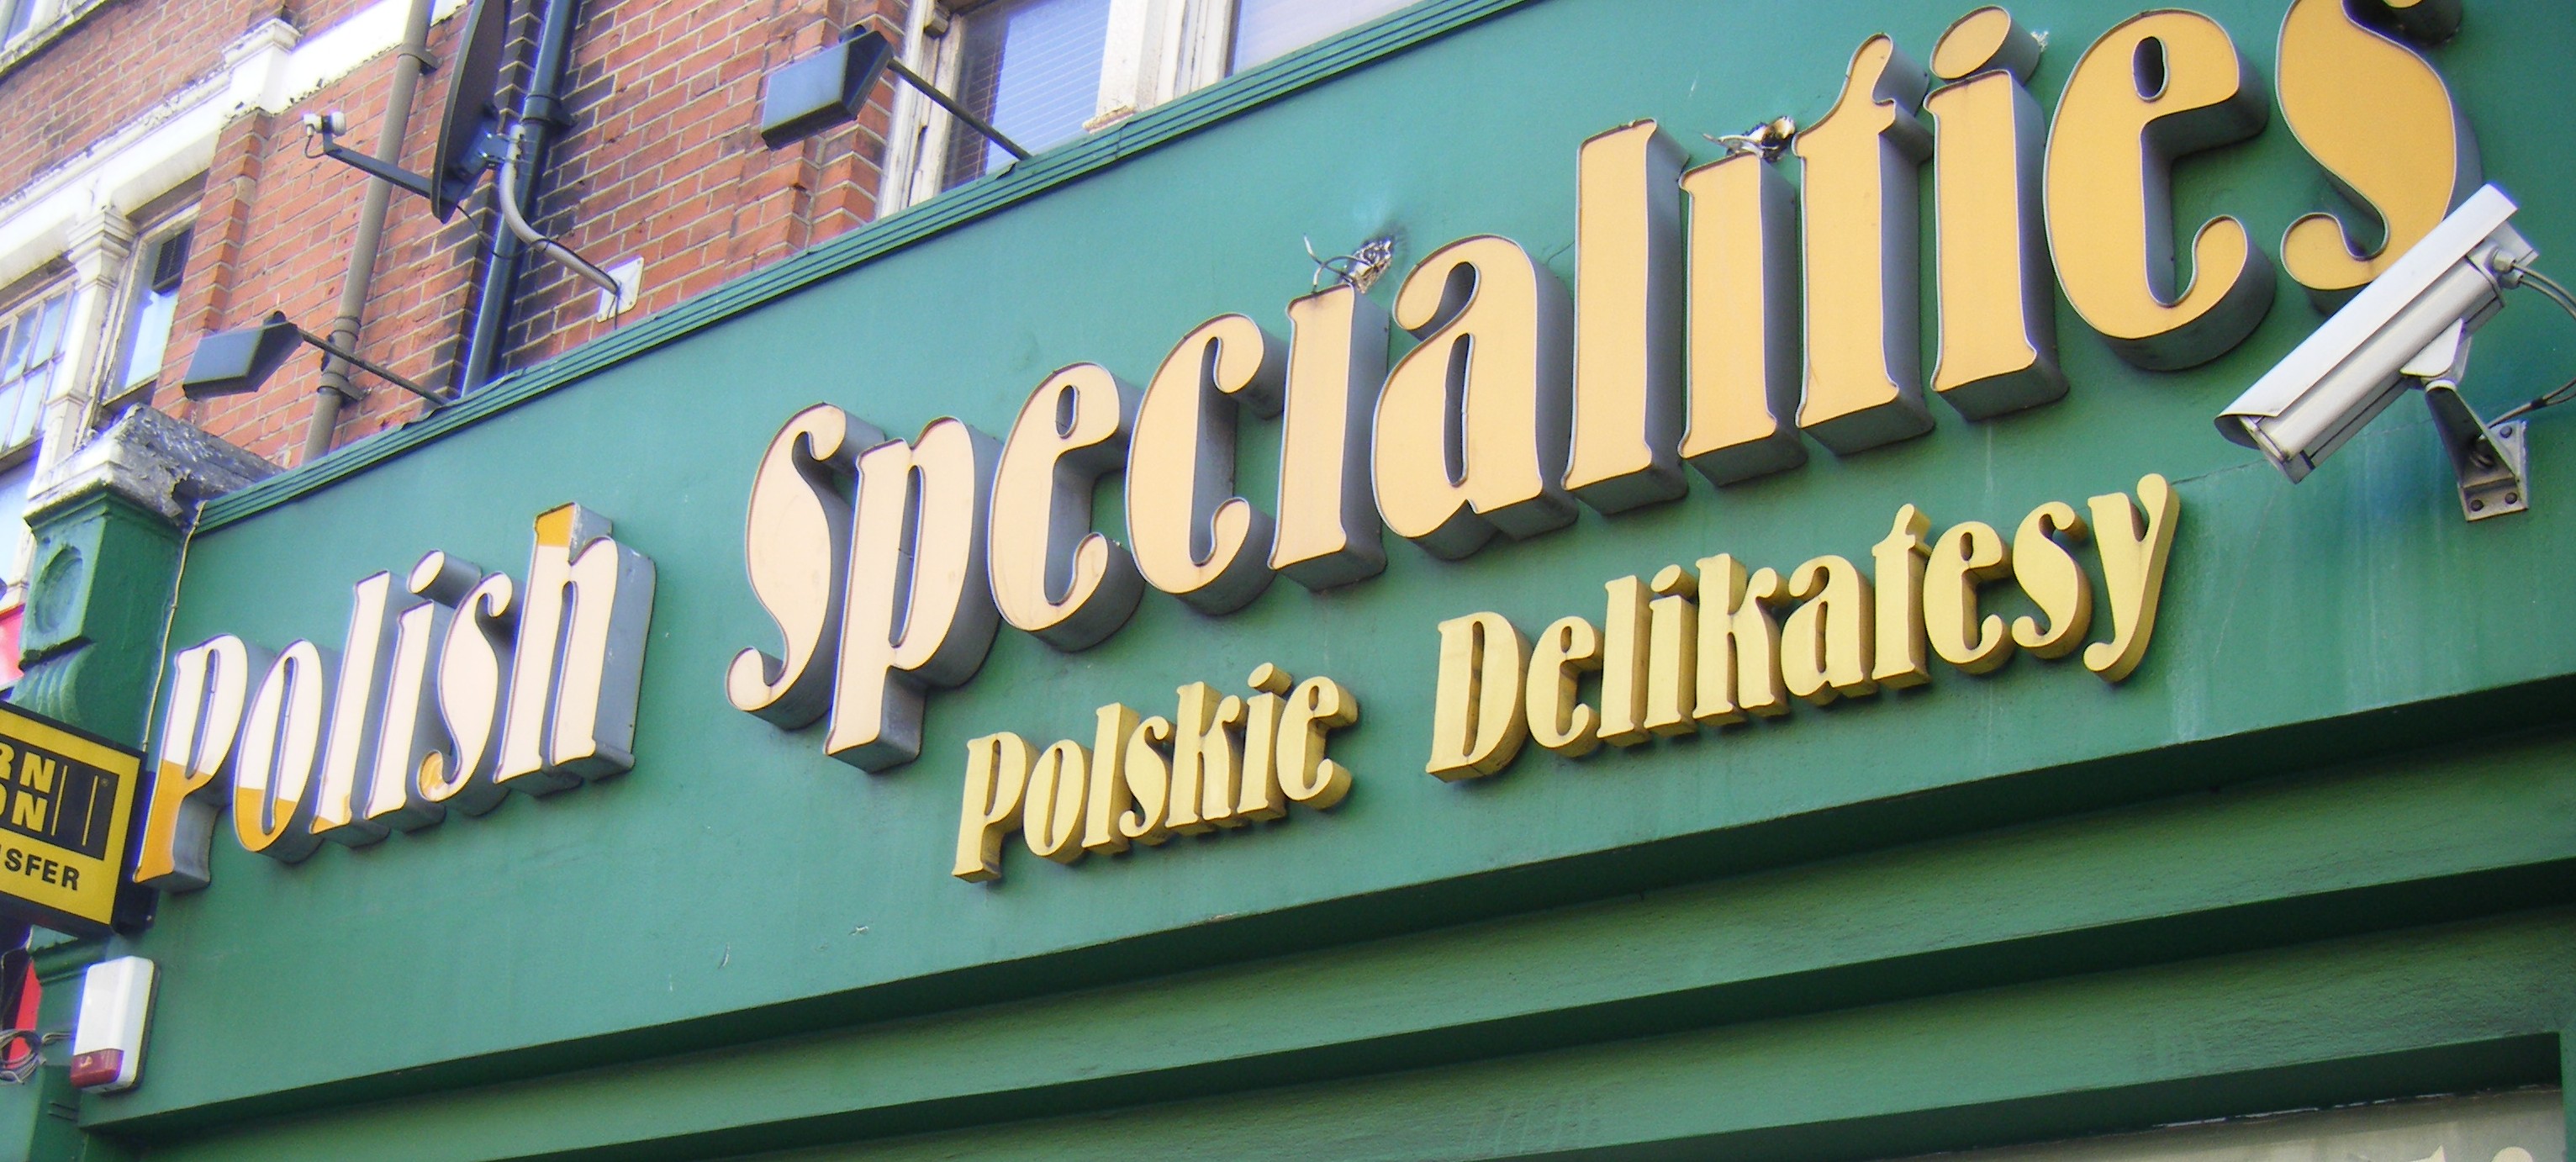 Polish Specialties 1